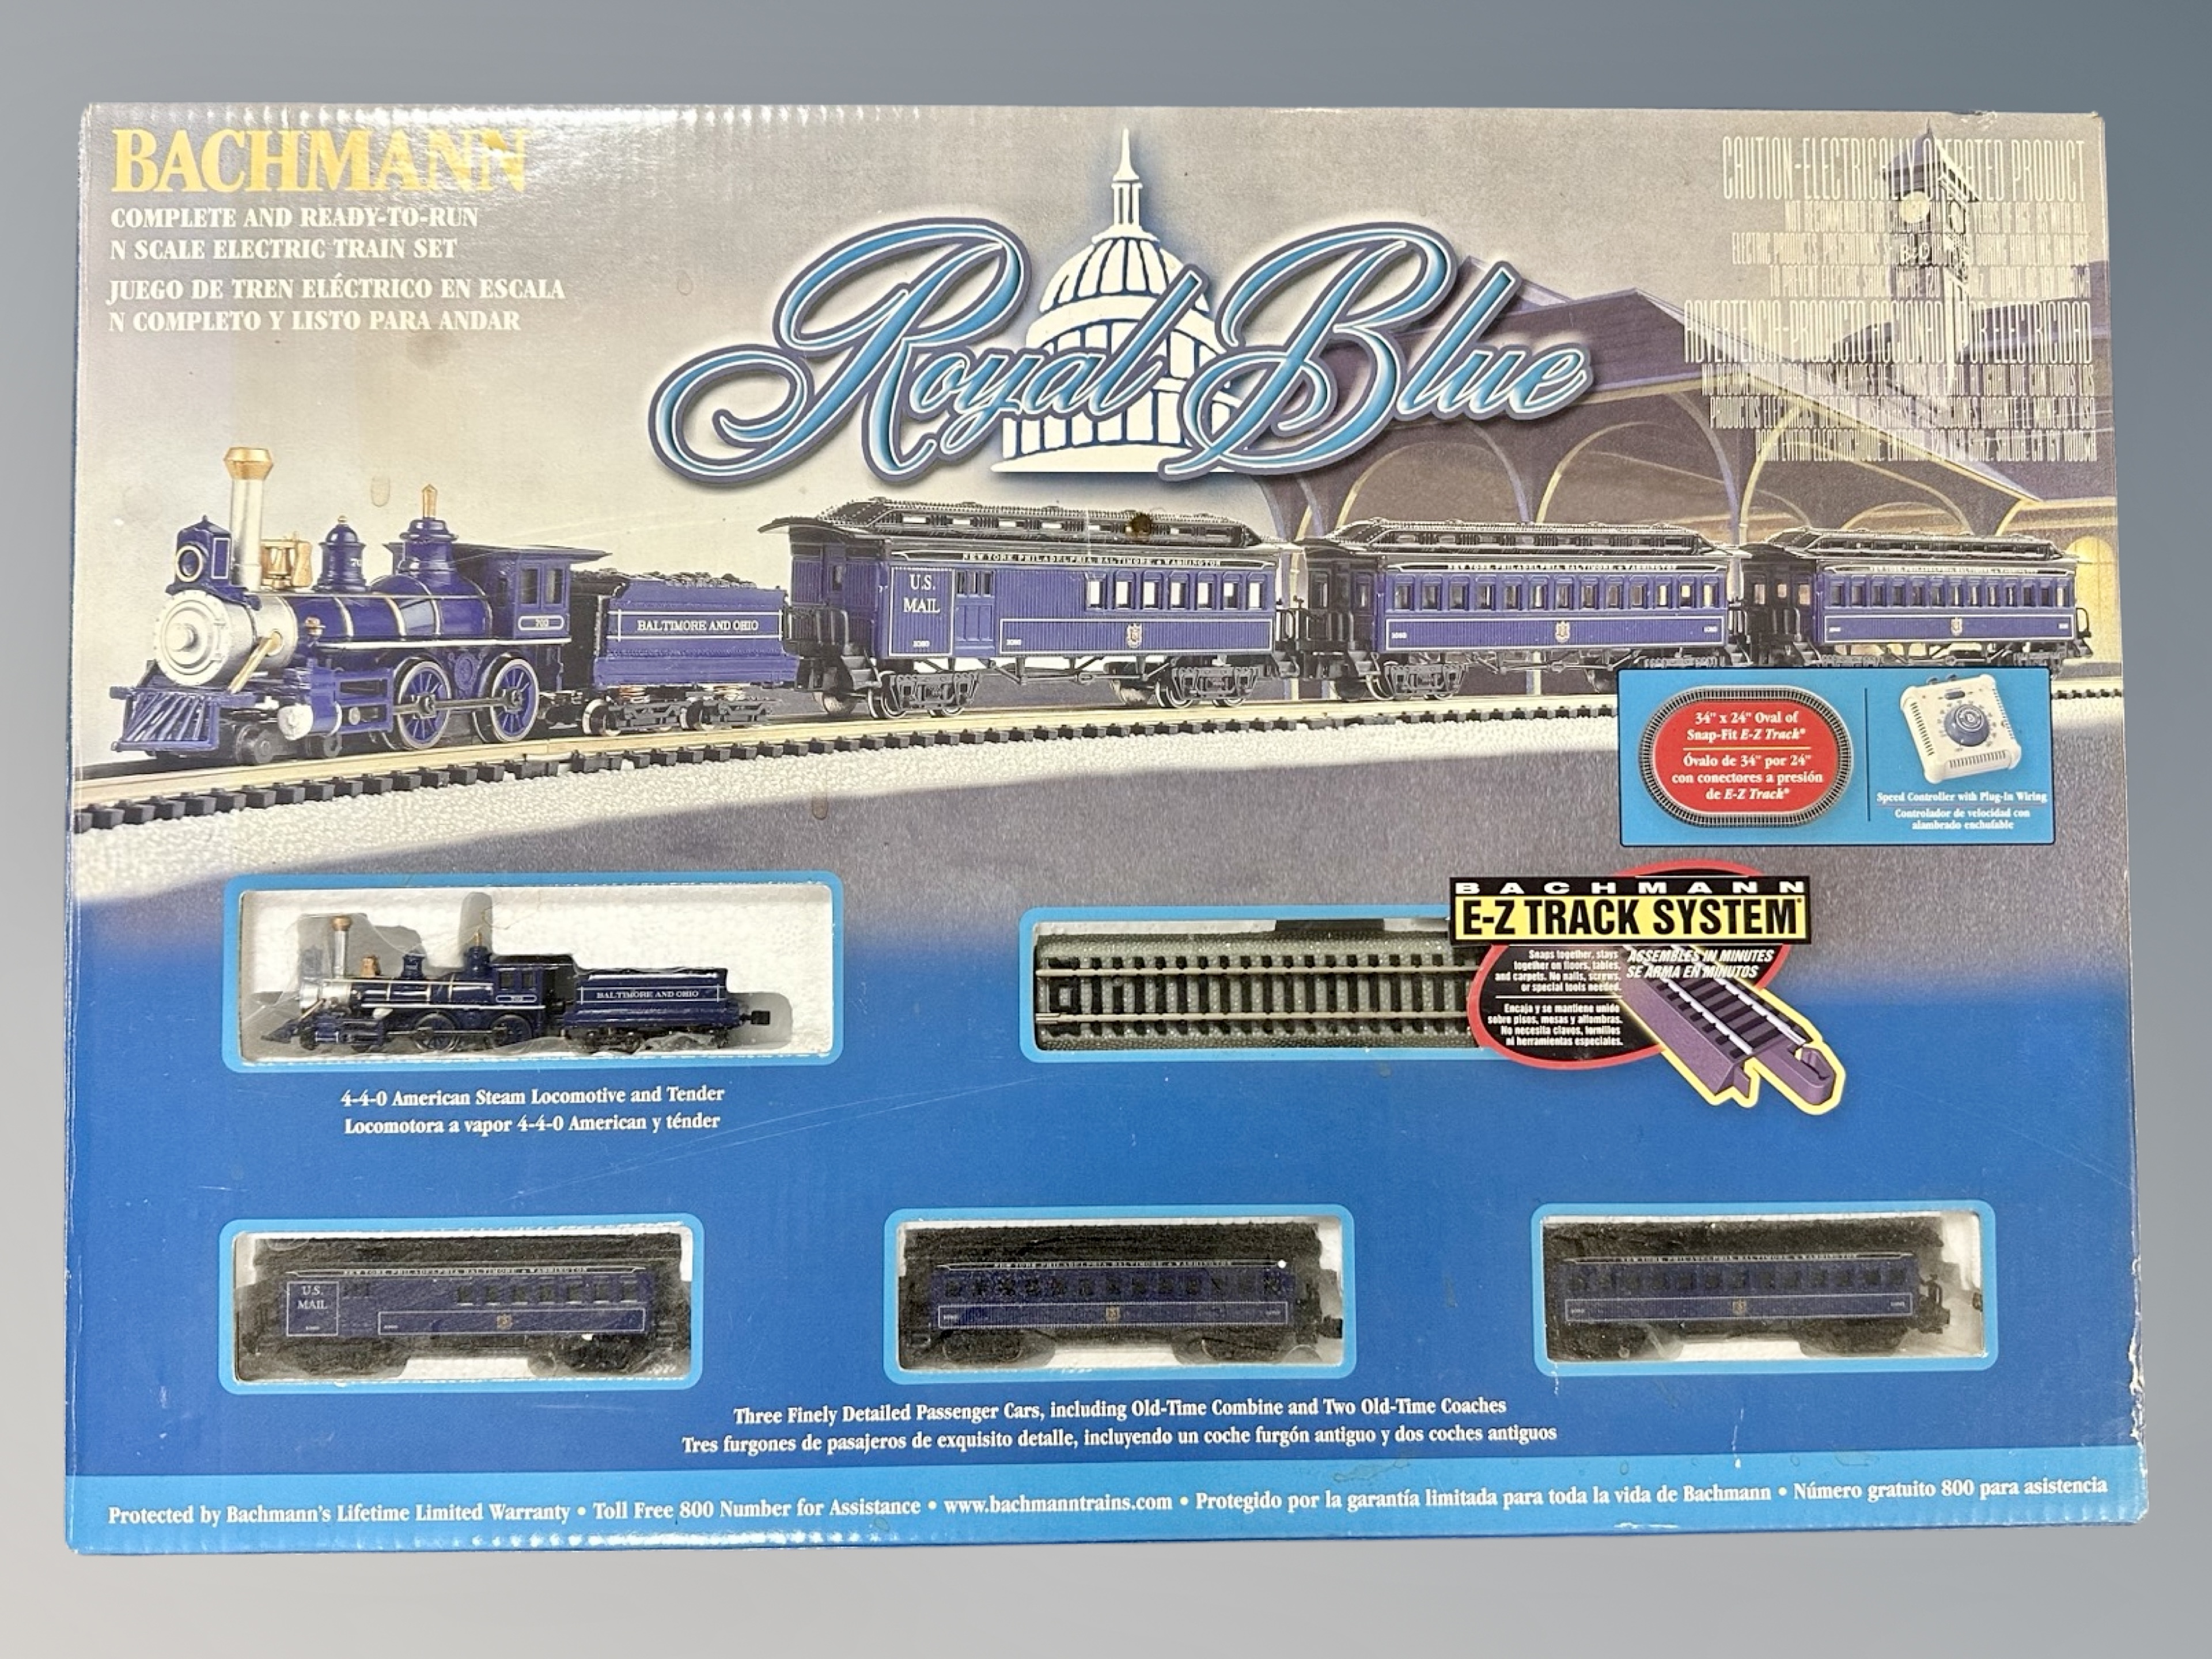 A Bachmann N scale Royal Blue train set in box